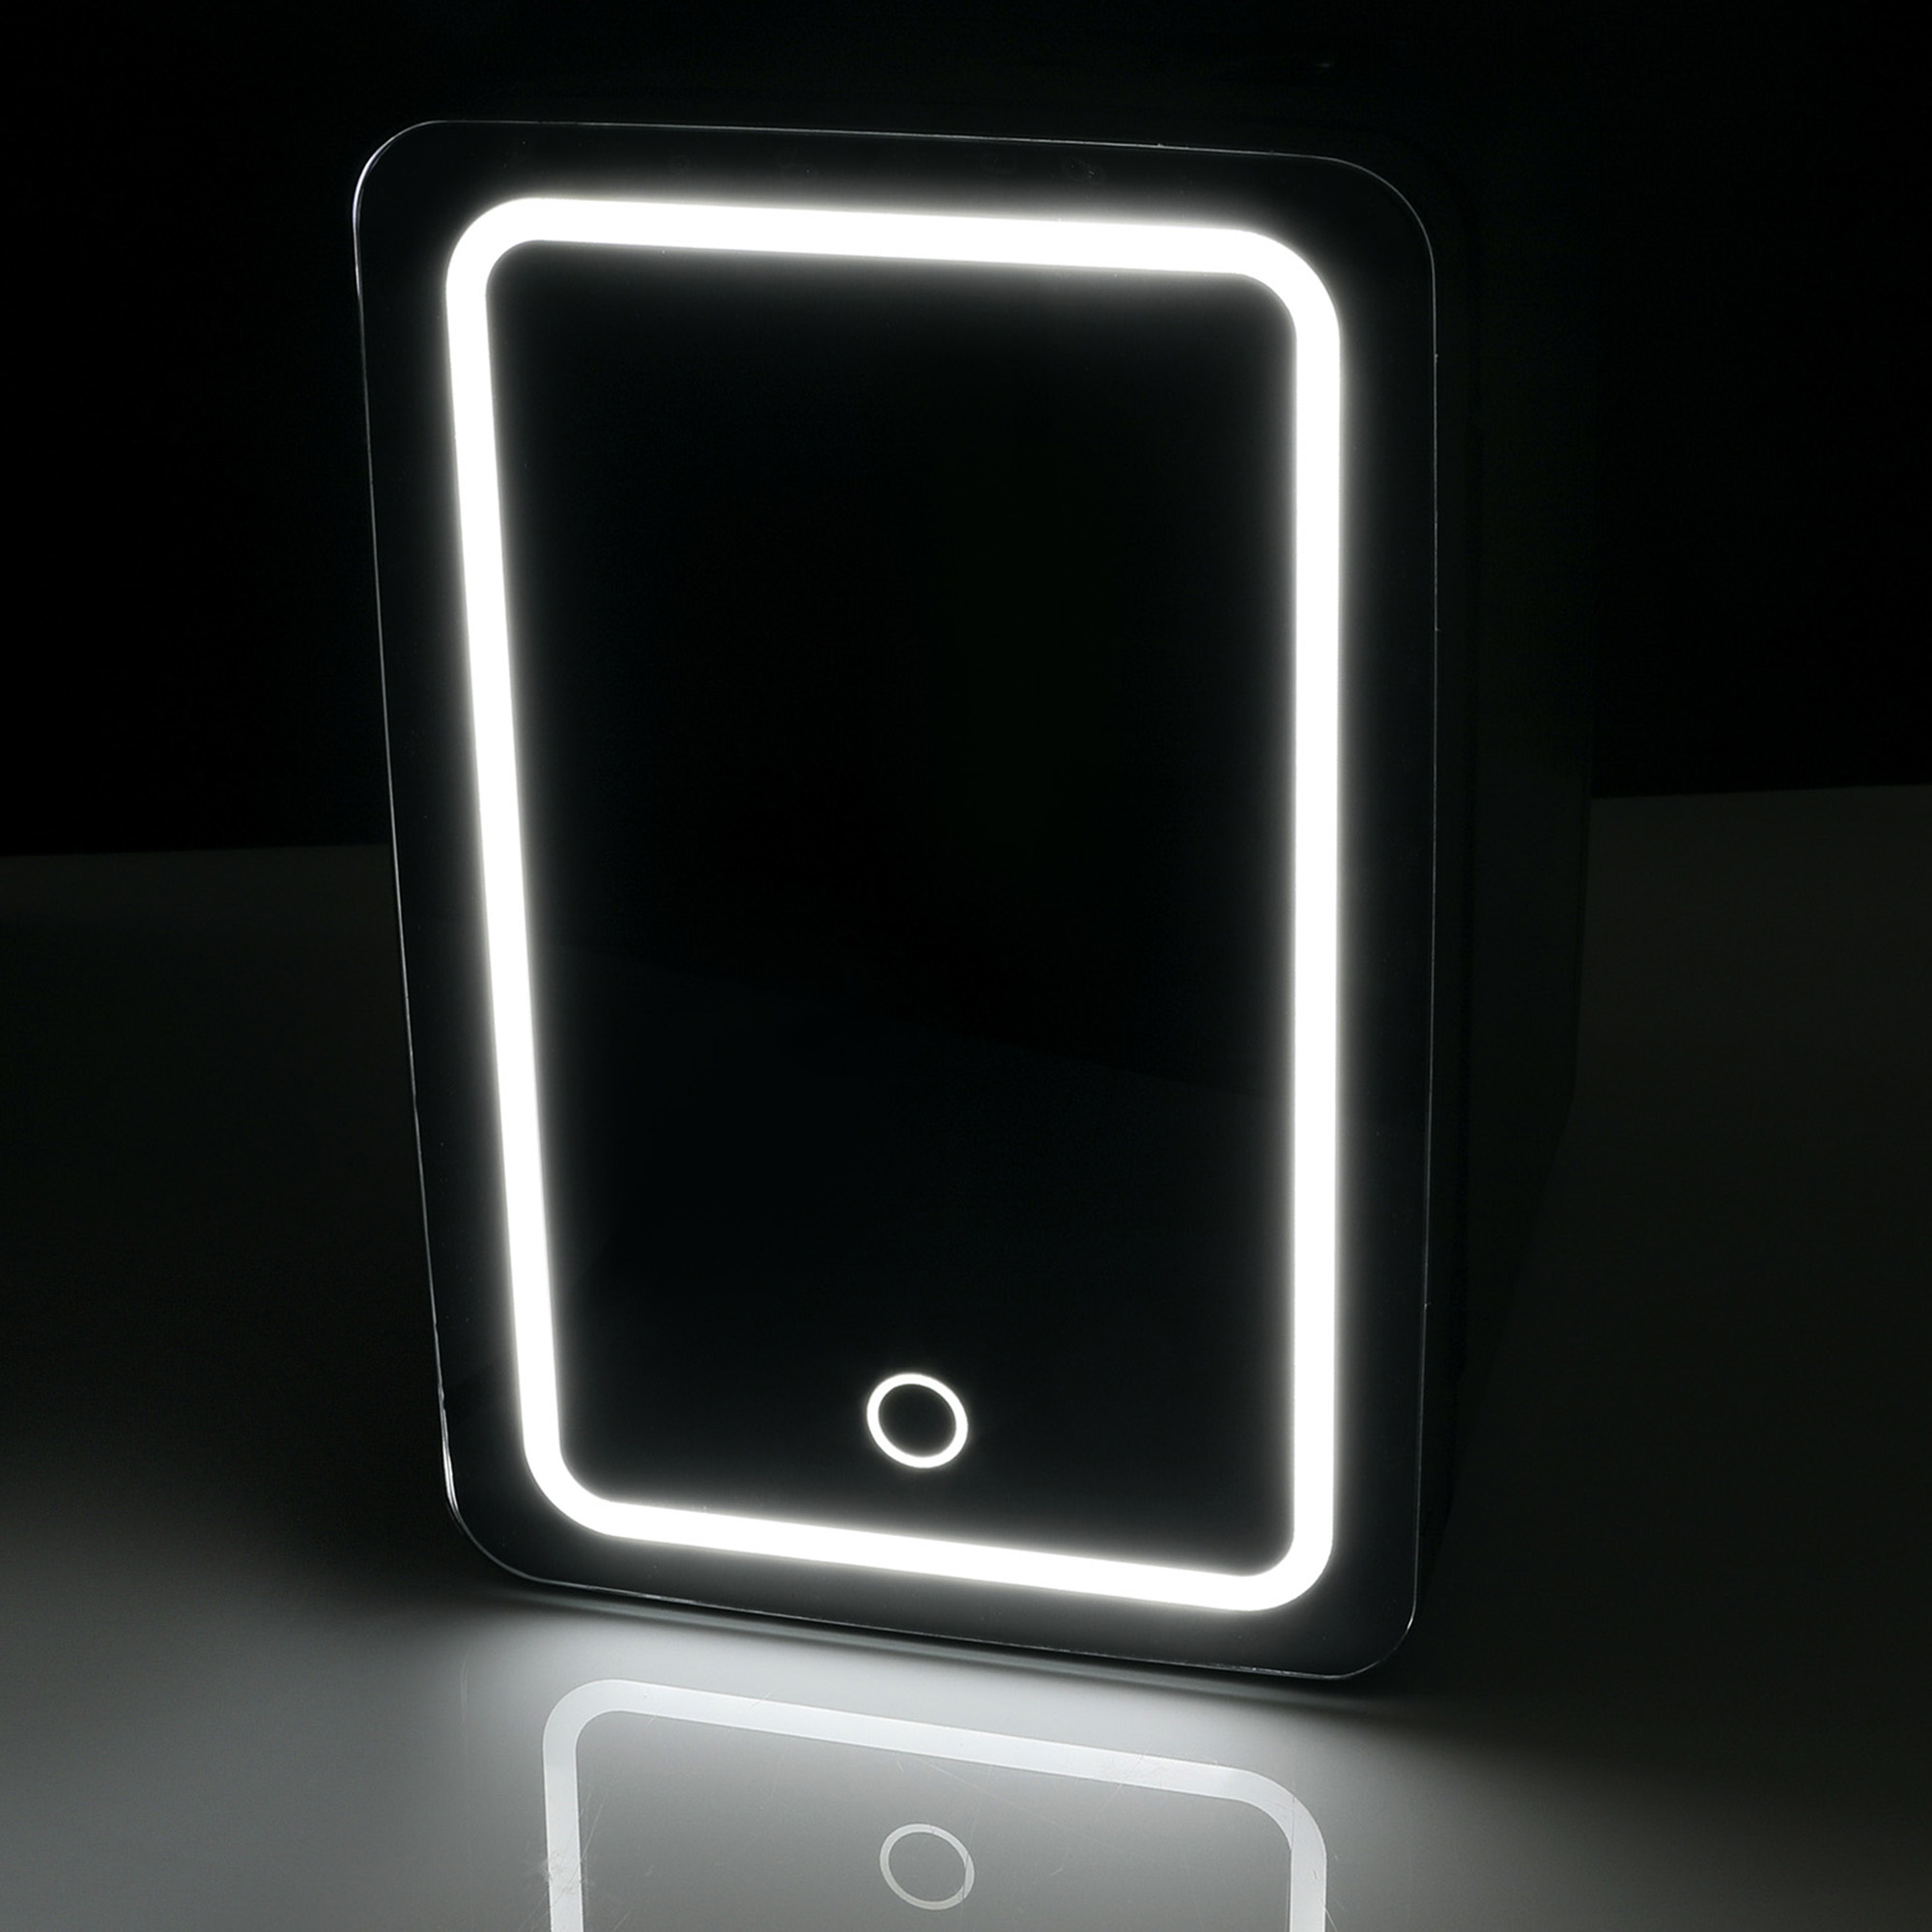 Personal Chiller LED Lighted Mini Fridge with Glass Door, New, Black, Standard Hinge Door - image 12 of 14